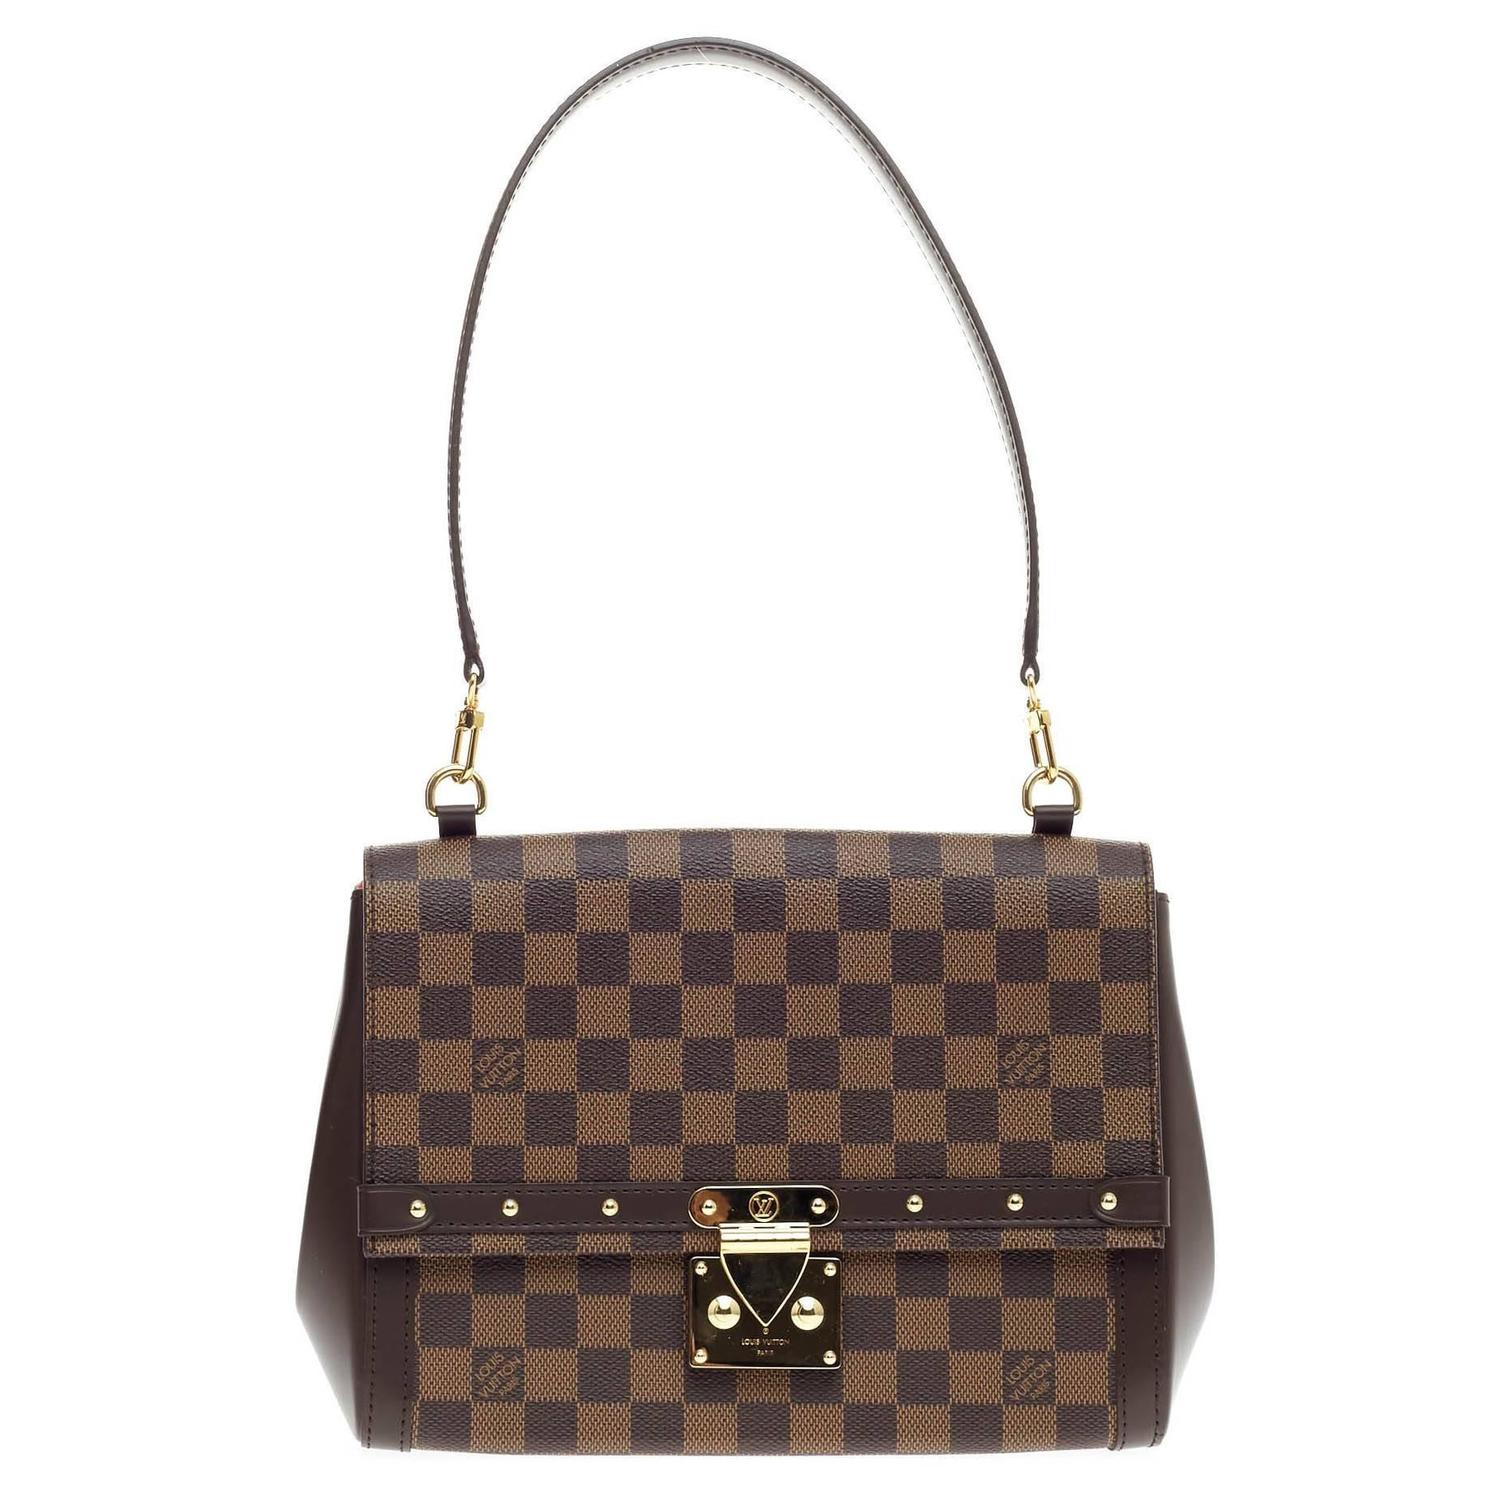 Louis Vuitton Venice Shoulder Bag Damier For Sale at 1stdibs